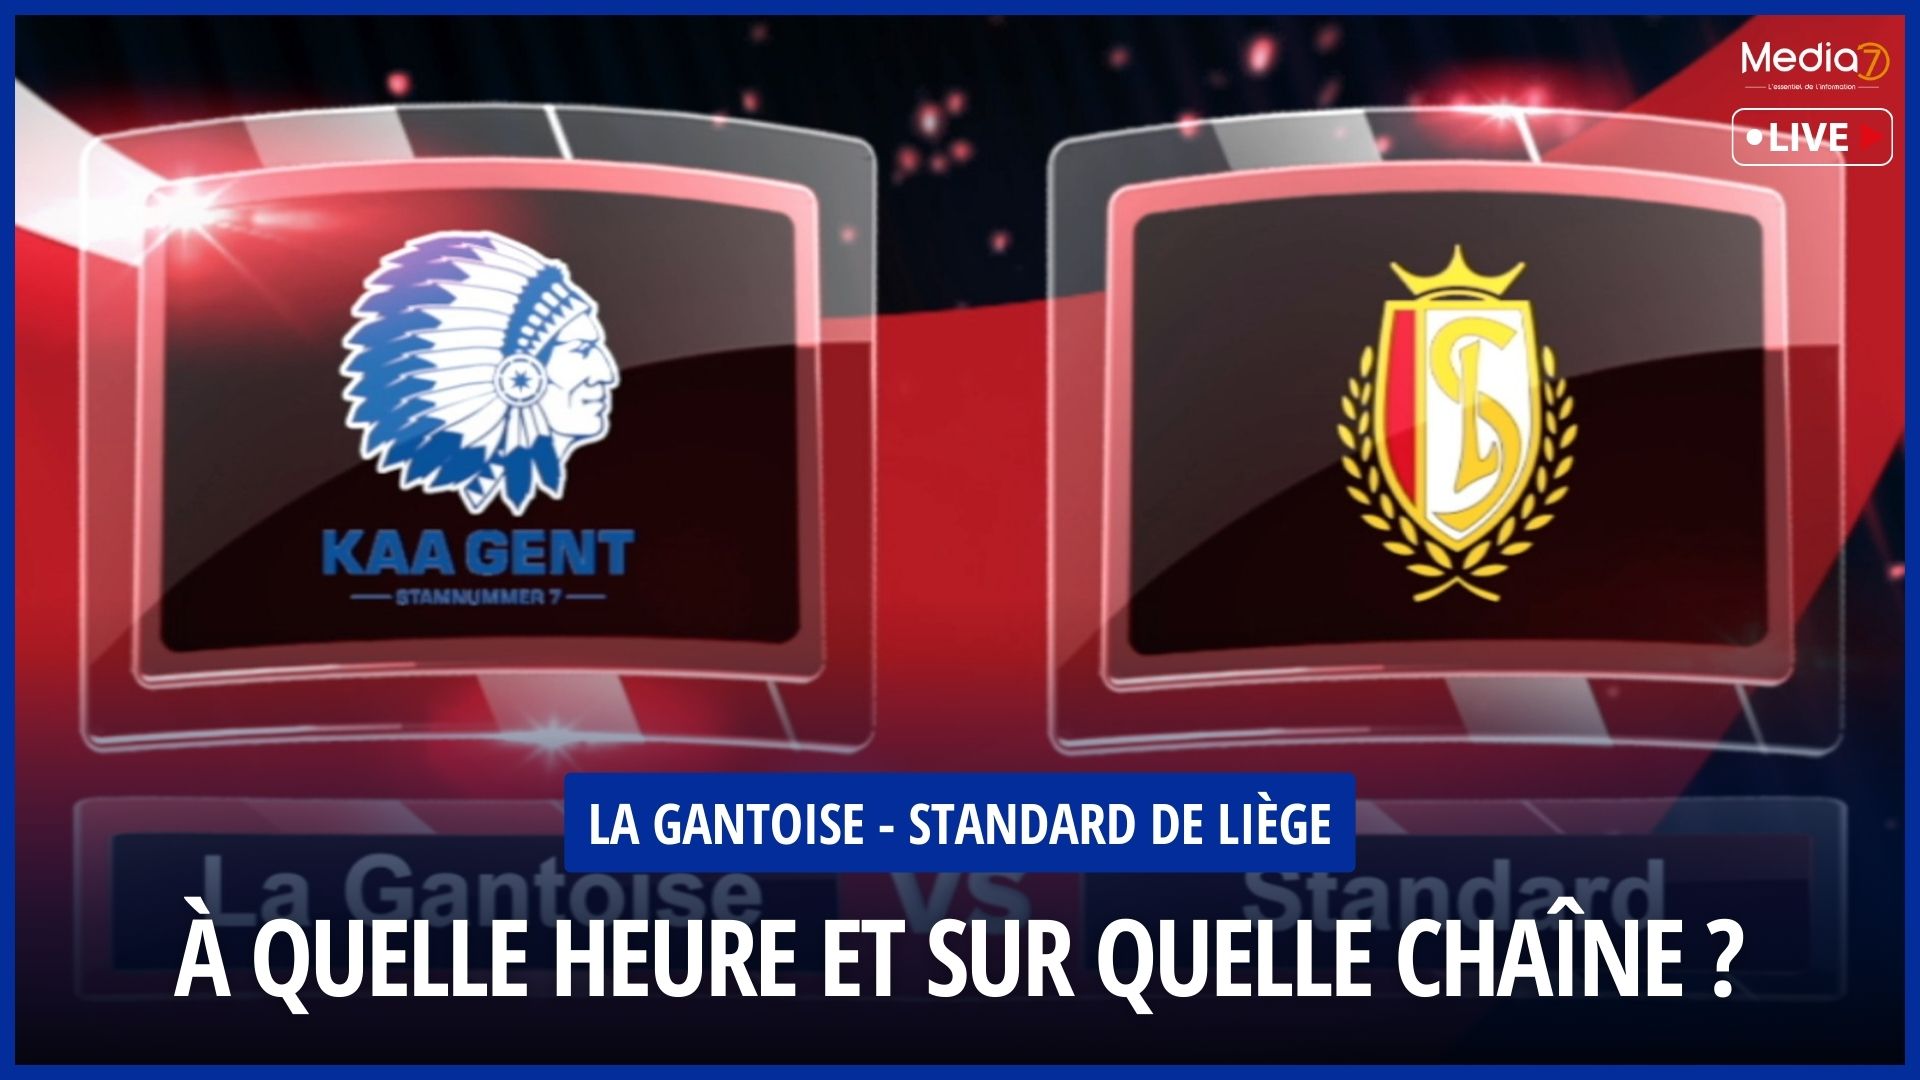 Match La Gantoise - Standard de Liège Live: Schedule, TV Broadcast & Streaming - Media7